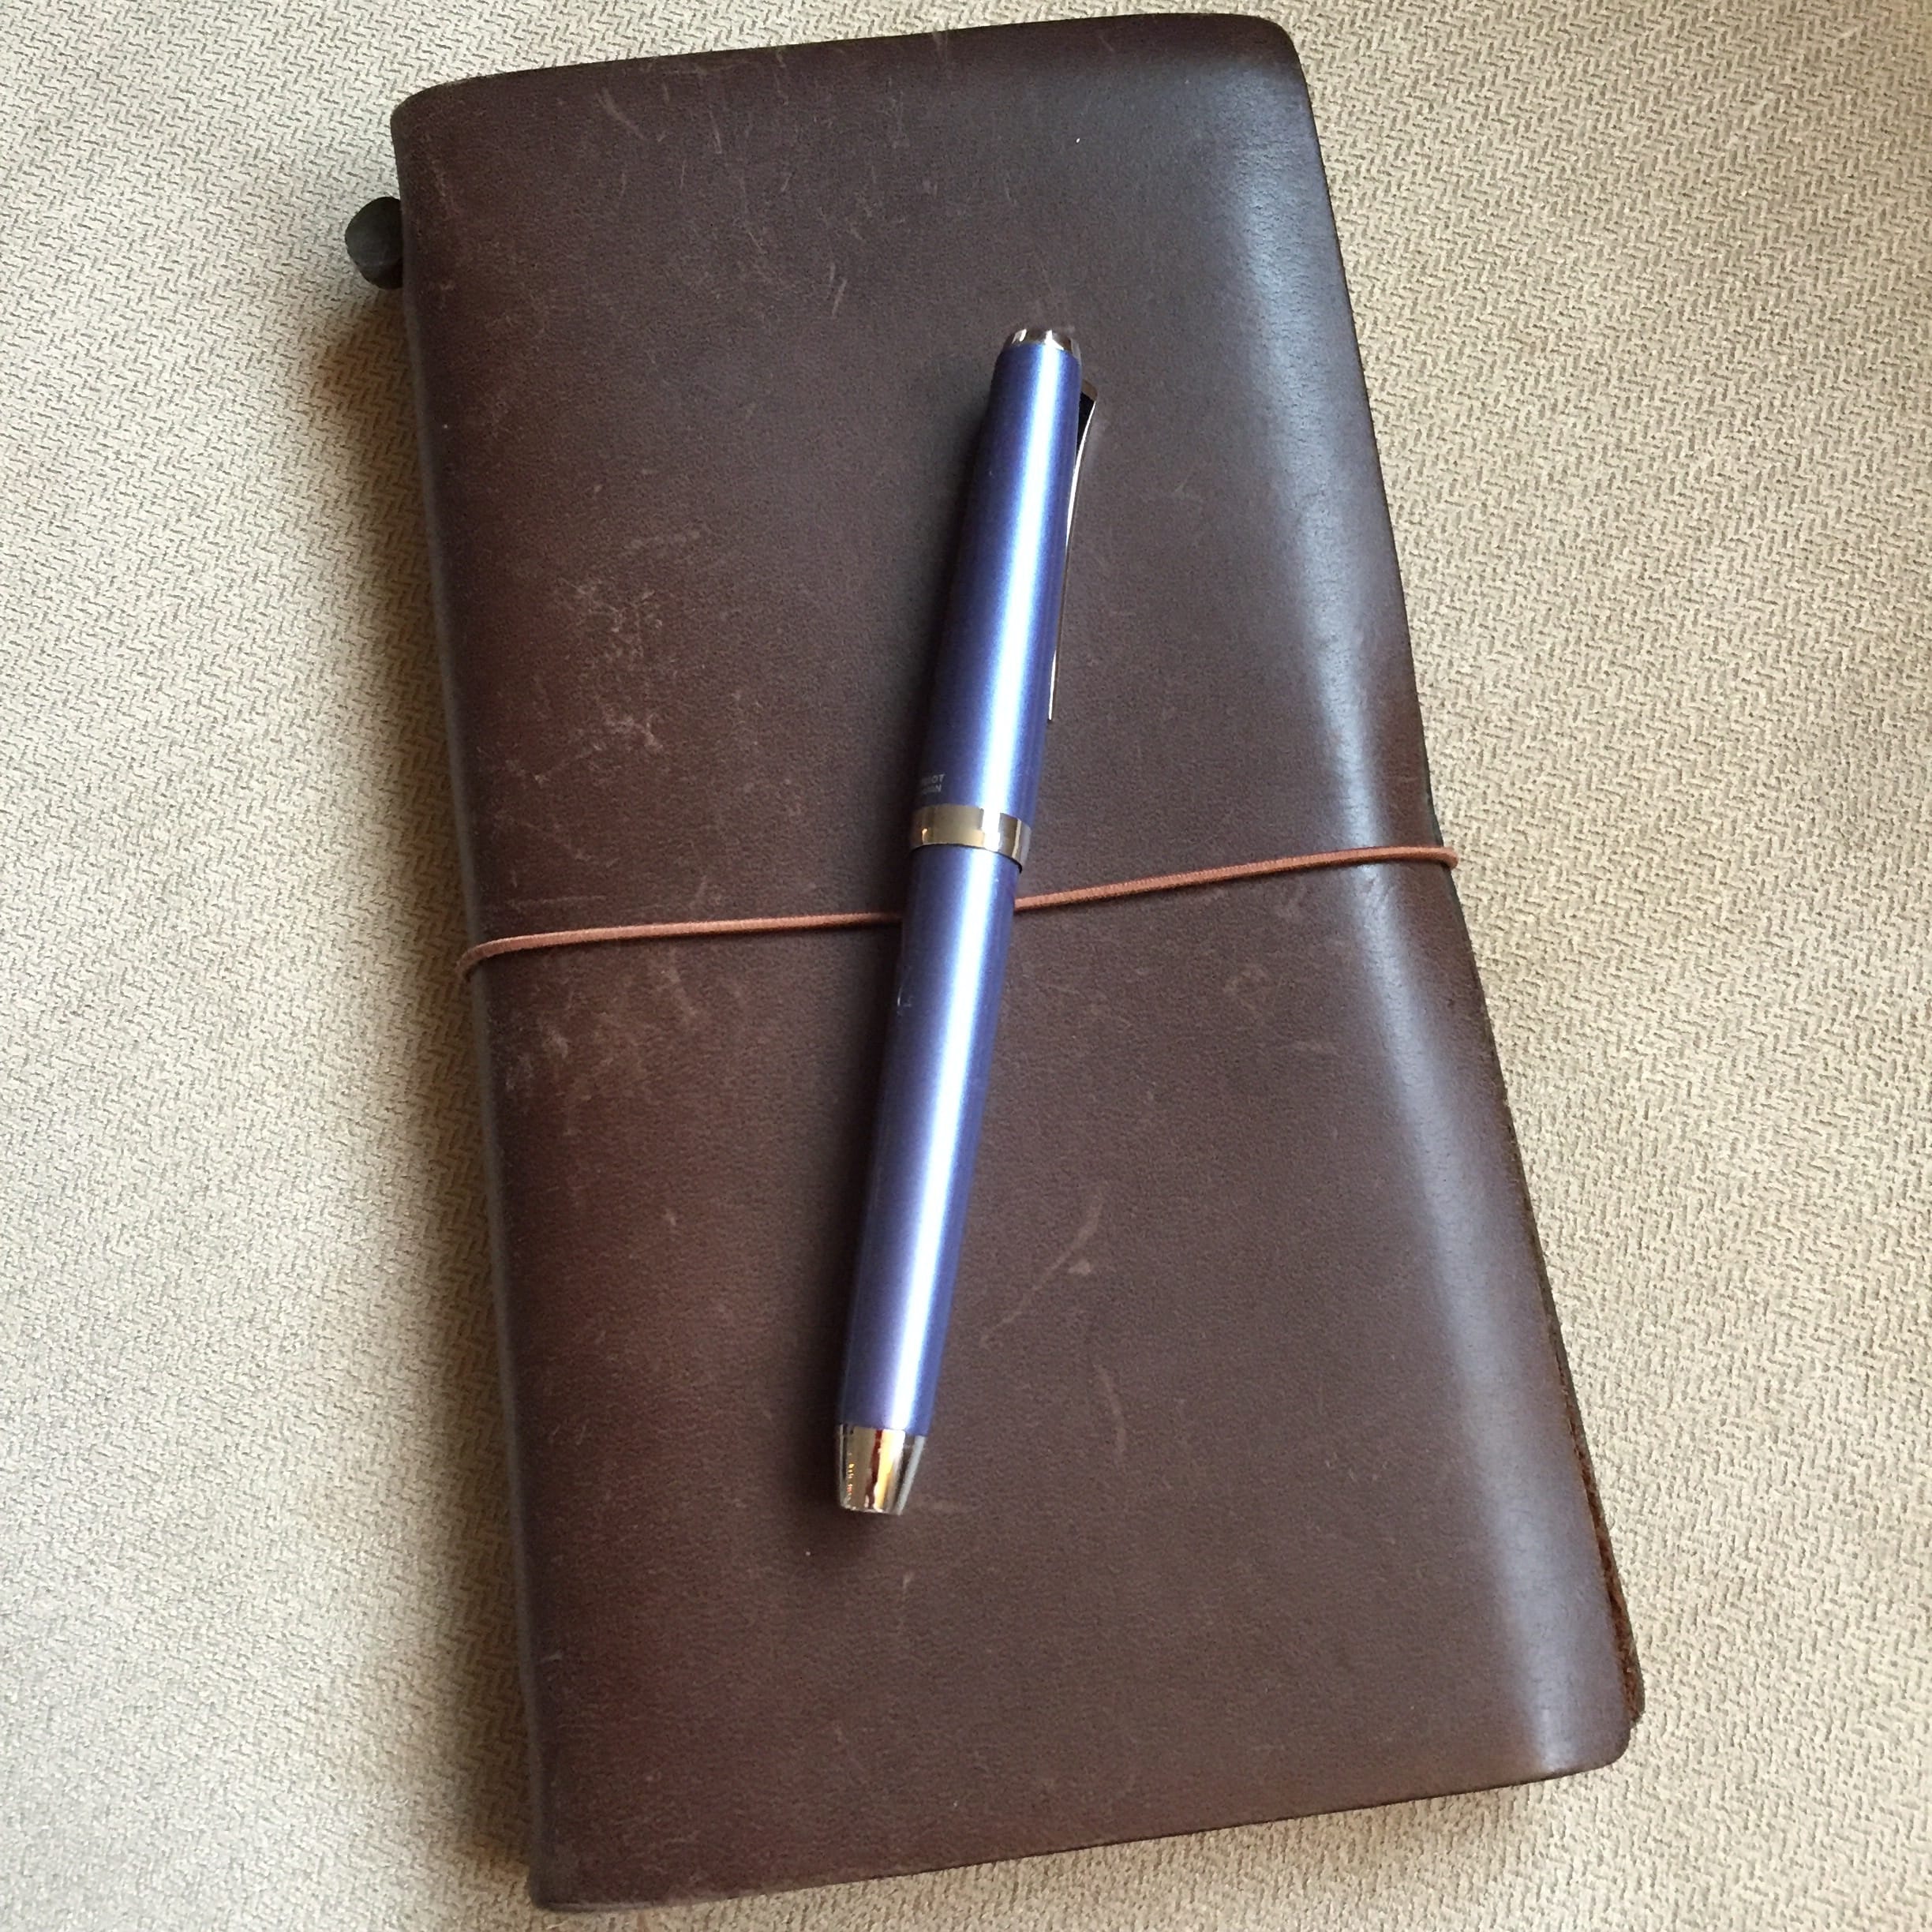 Traveler’s Notebook